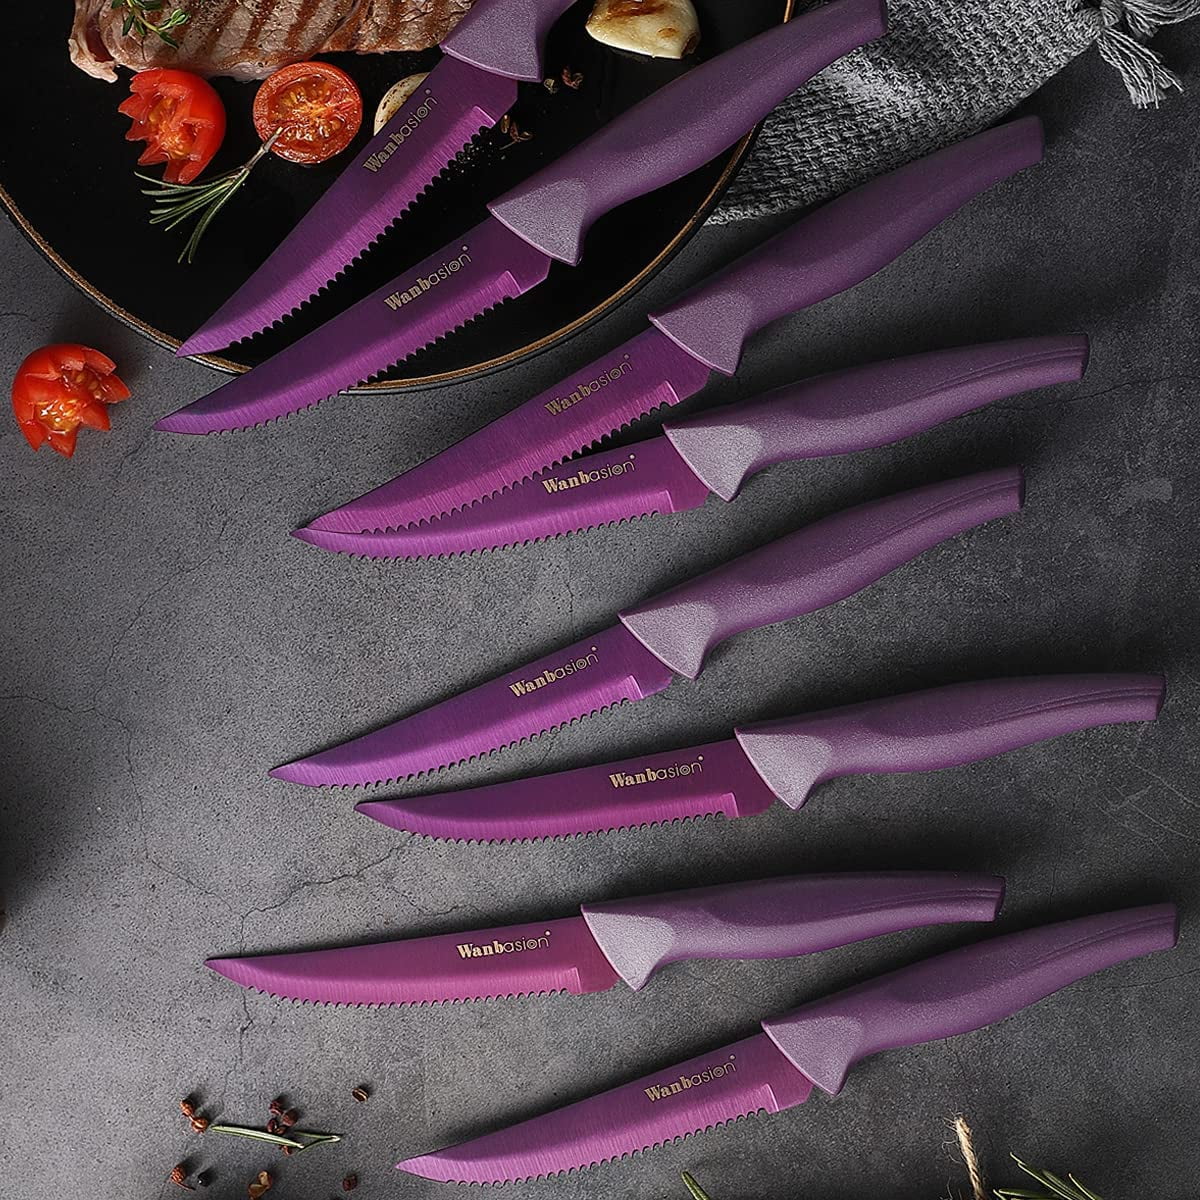 Bass Kitchen Knife Set Of 7 Piece - Purple